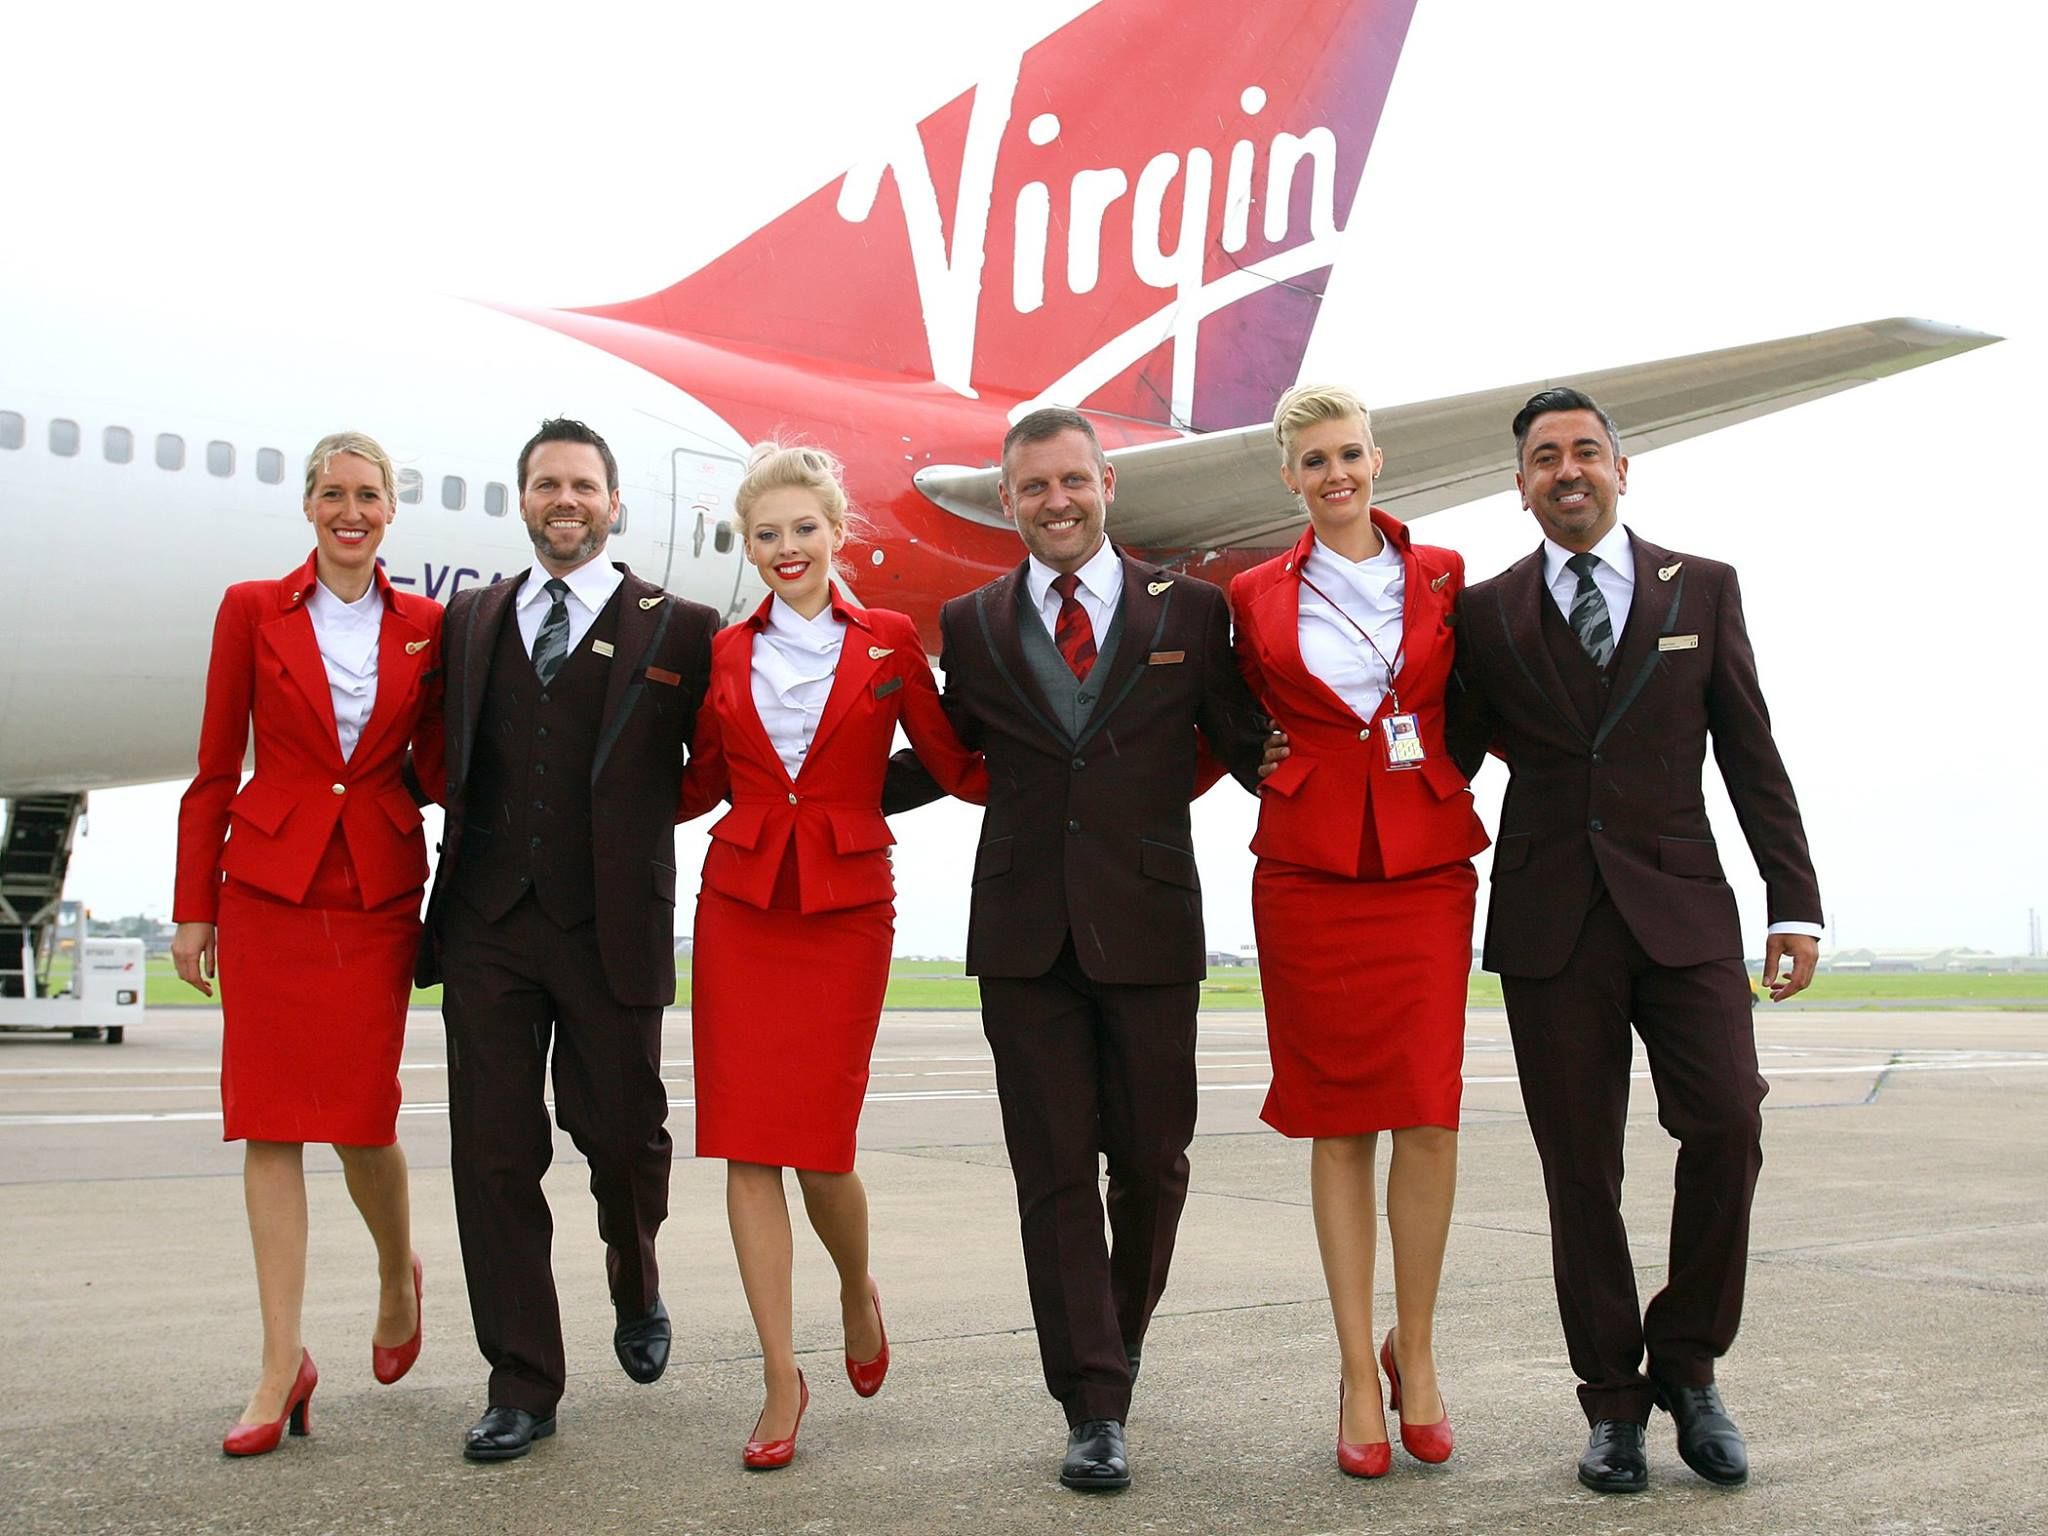 Virgin atlantic cabin crew walking in front of an aircraft.